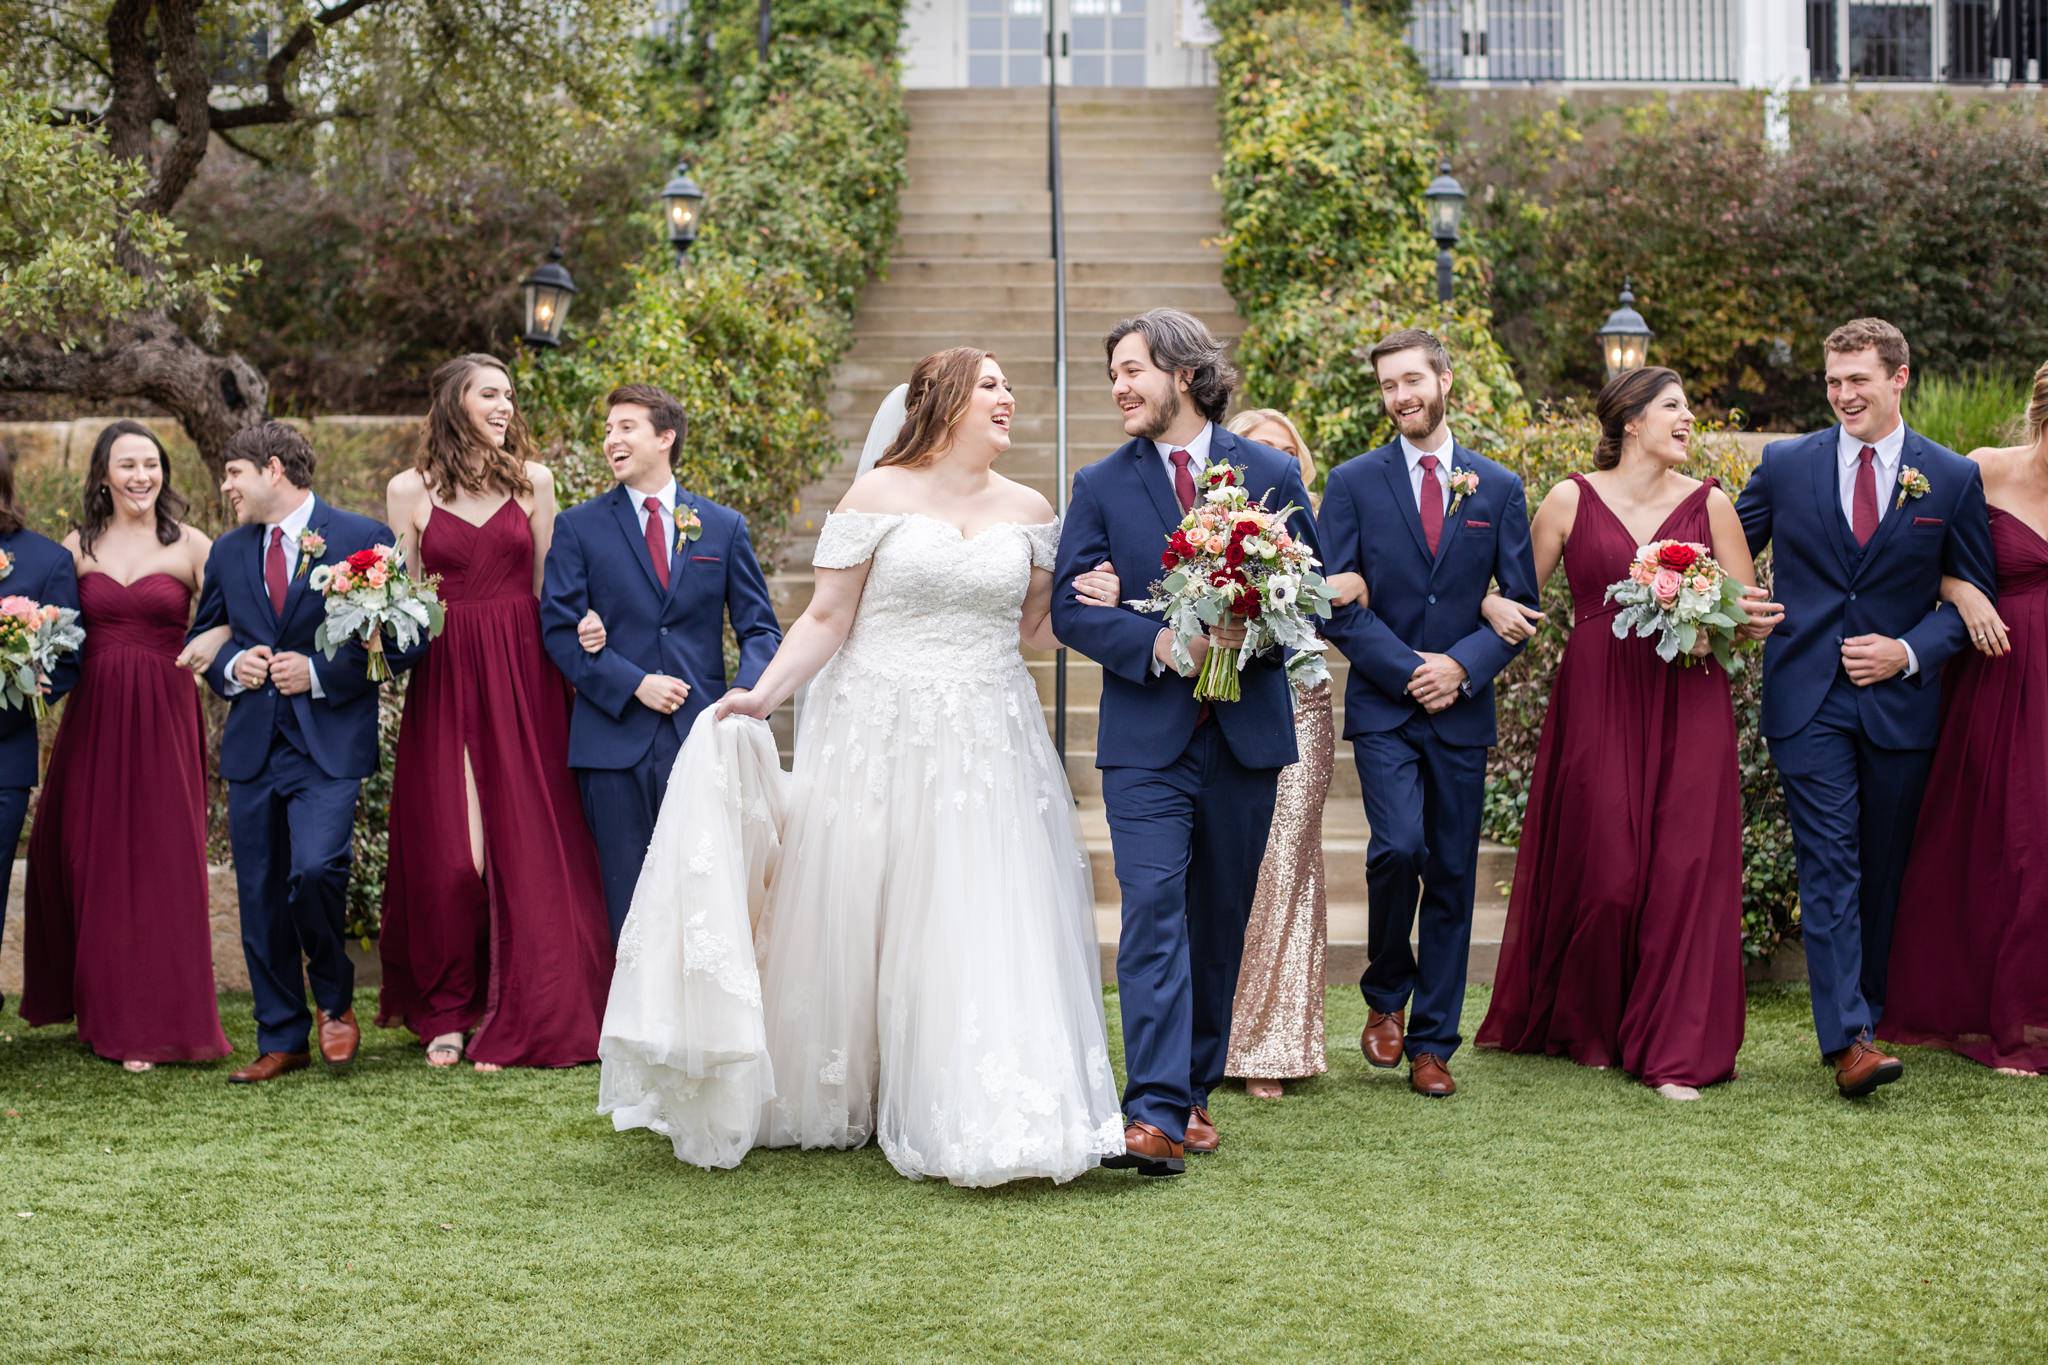 A Burgundy, Navy and Coral Wedding at Kendall Point in Boerne, TX by Dawn Elizabeth Studios, Boerne Wedding Photographer